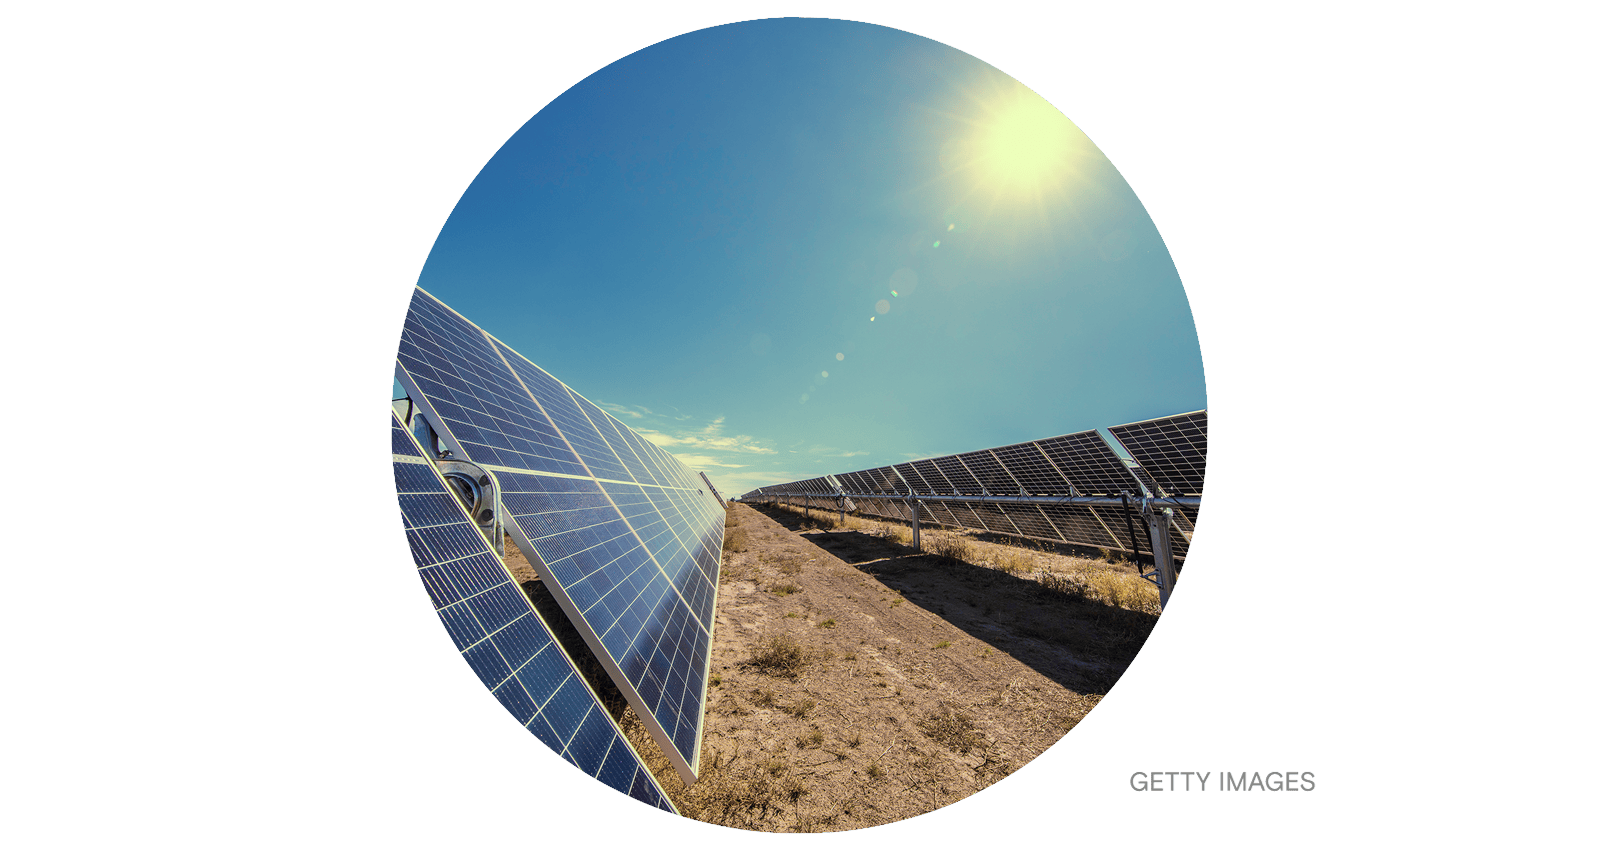 A solar farm in Central California